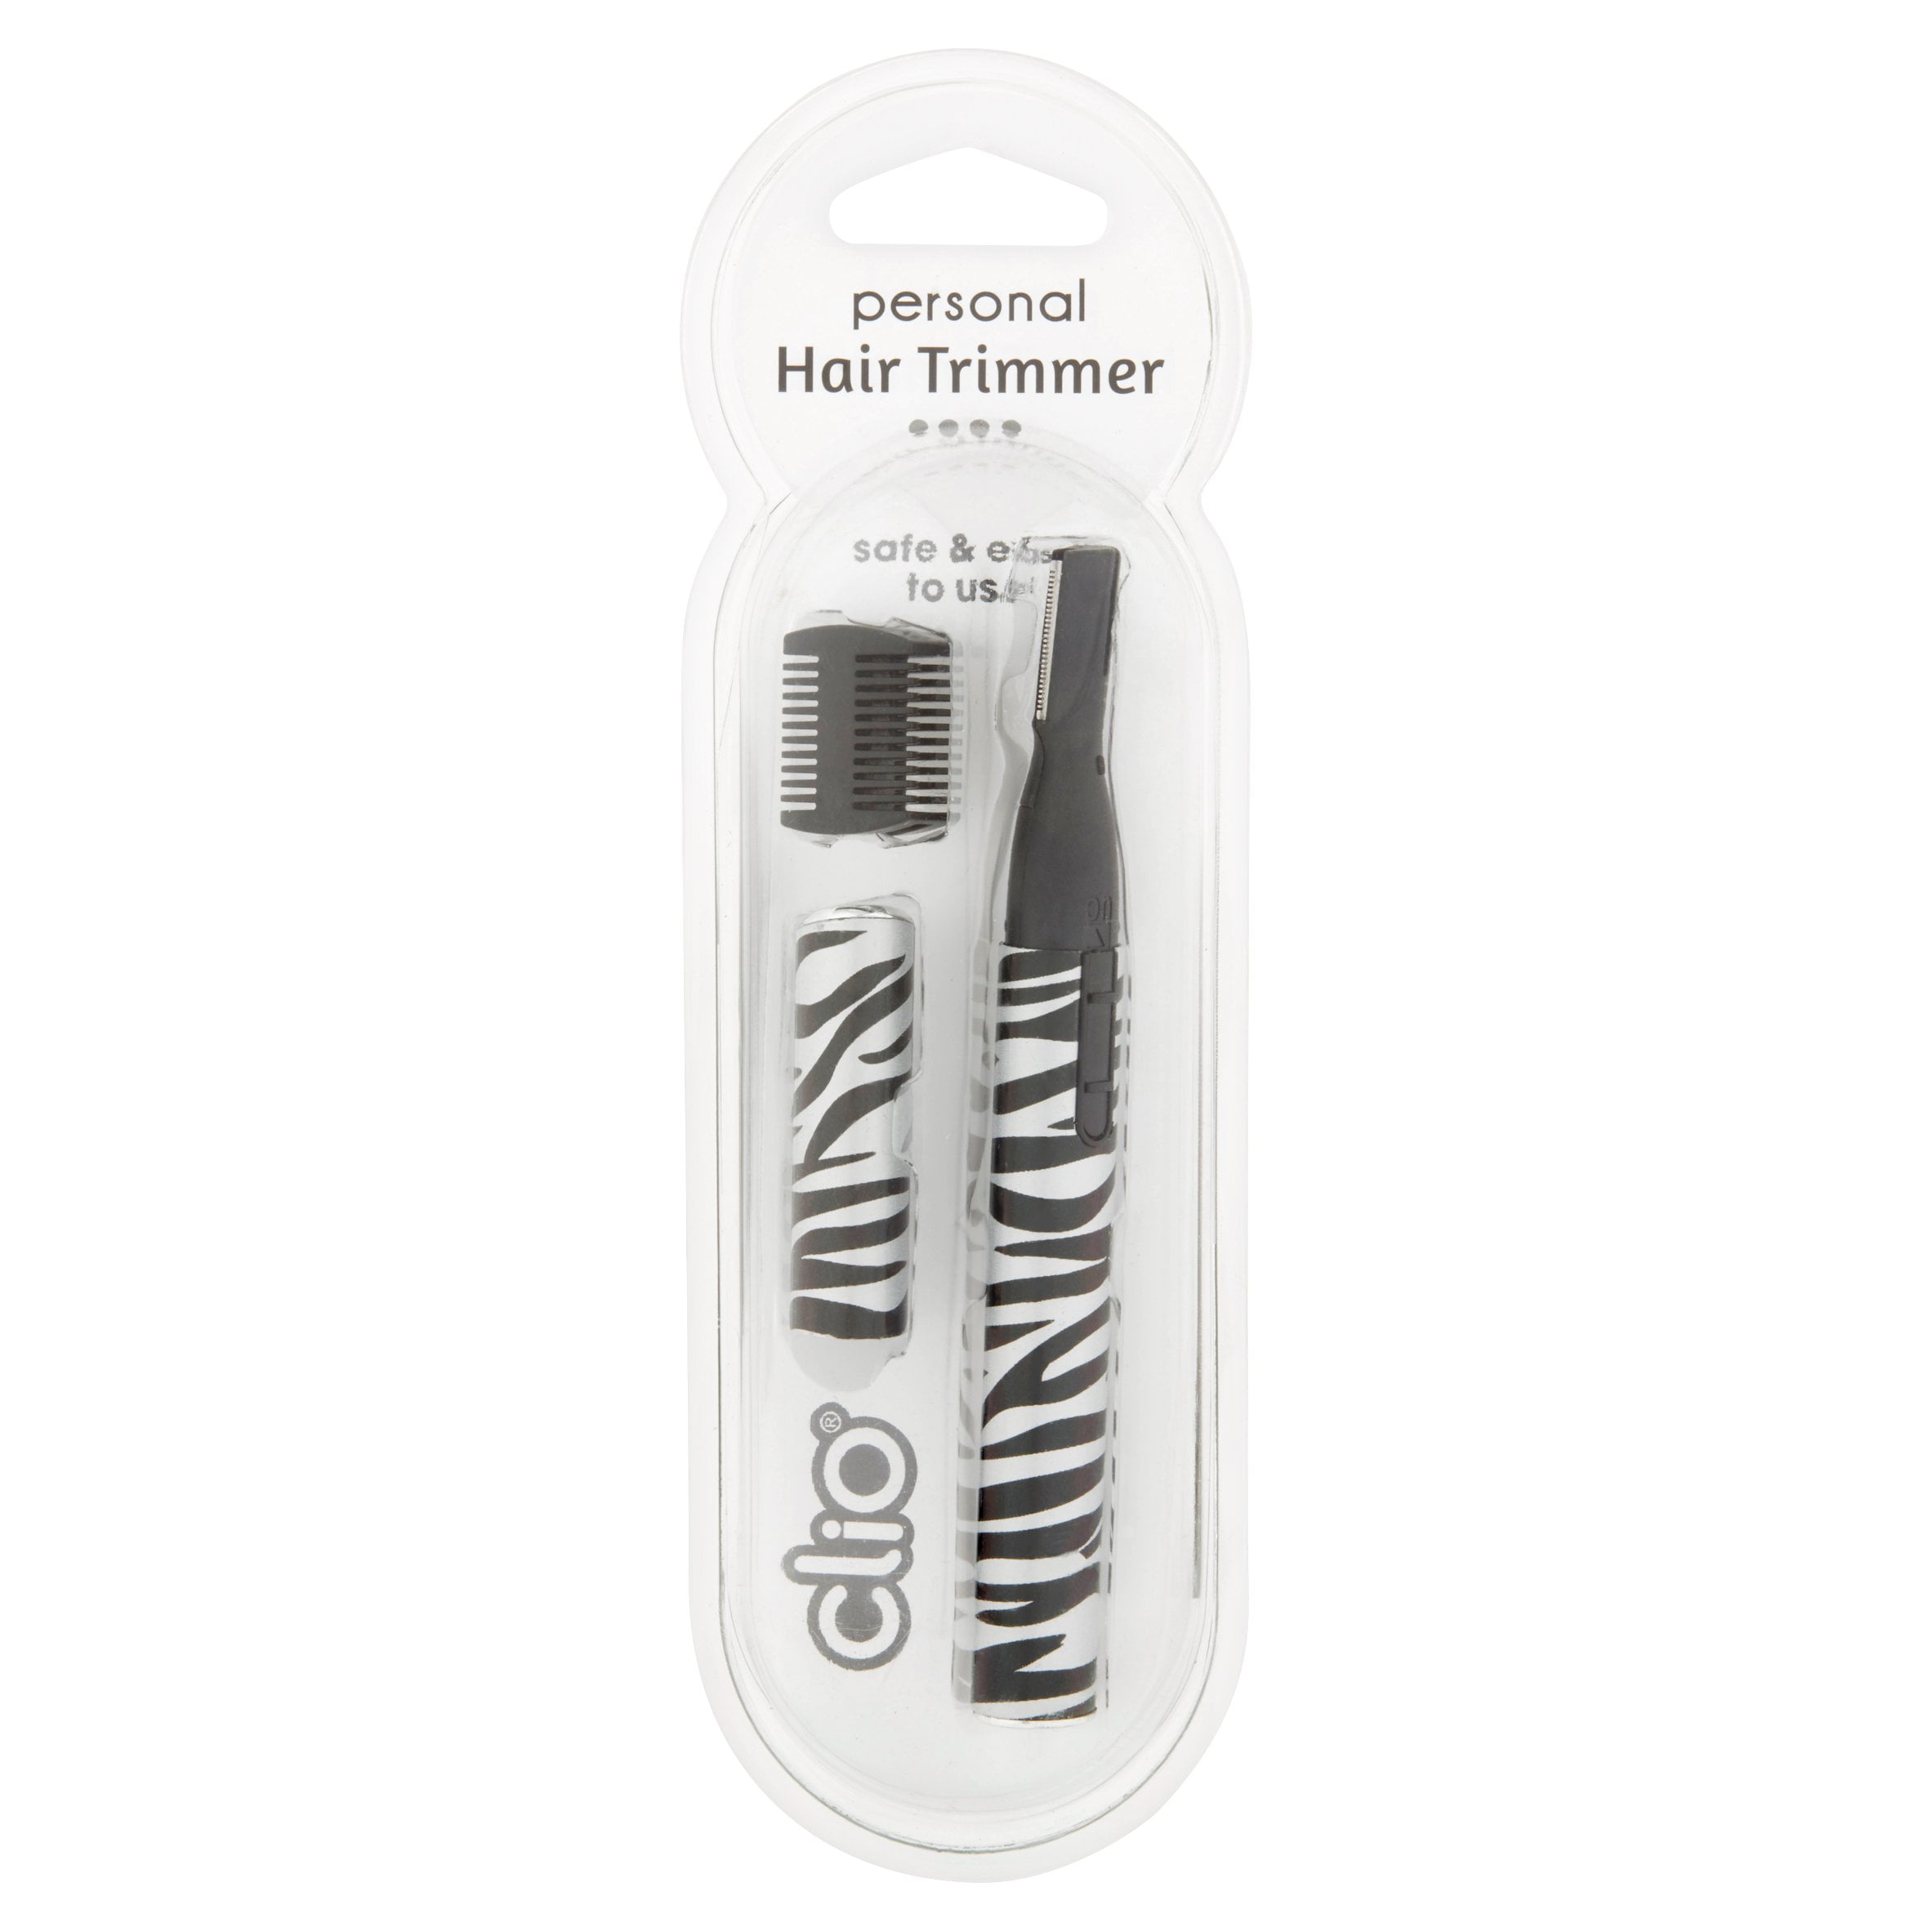 beautytrim personal hair trimmer walmart